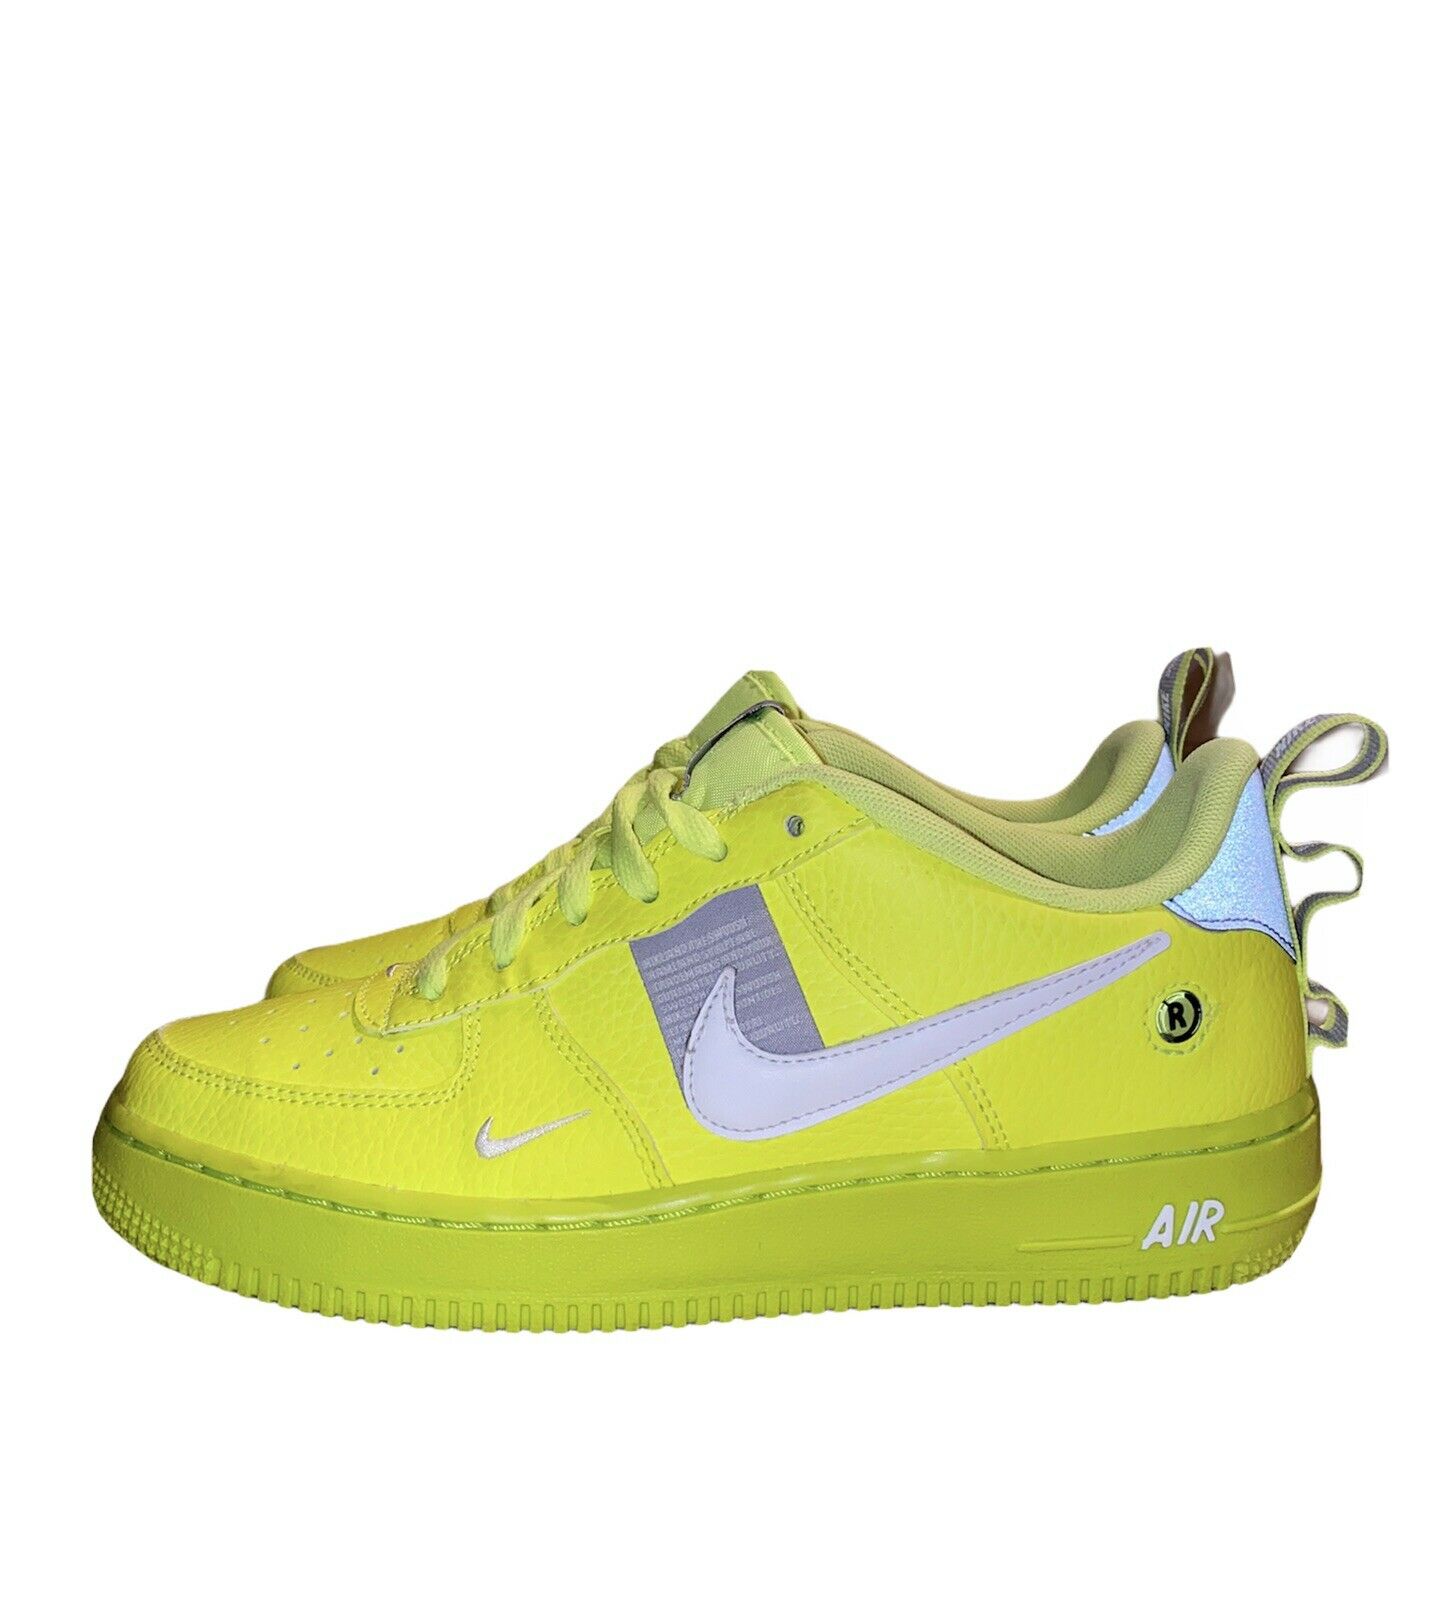 Nike Air Force 1 LV8 Utility GS Volt Shoes AR1708-700 Size 6.5 Y